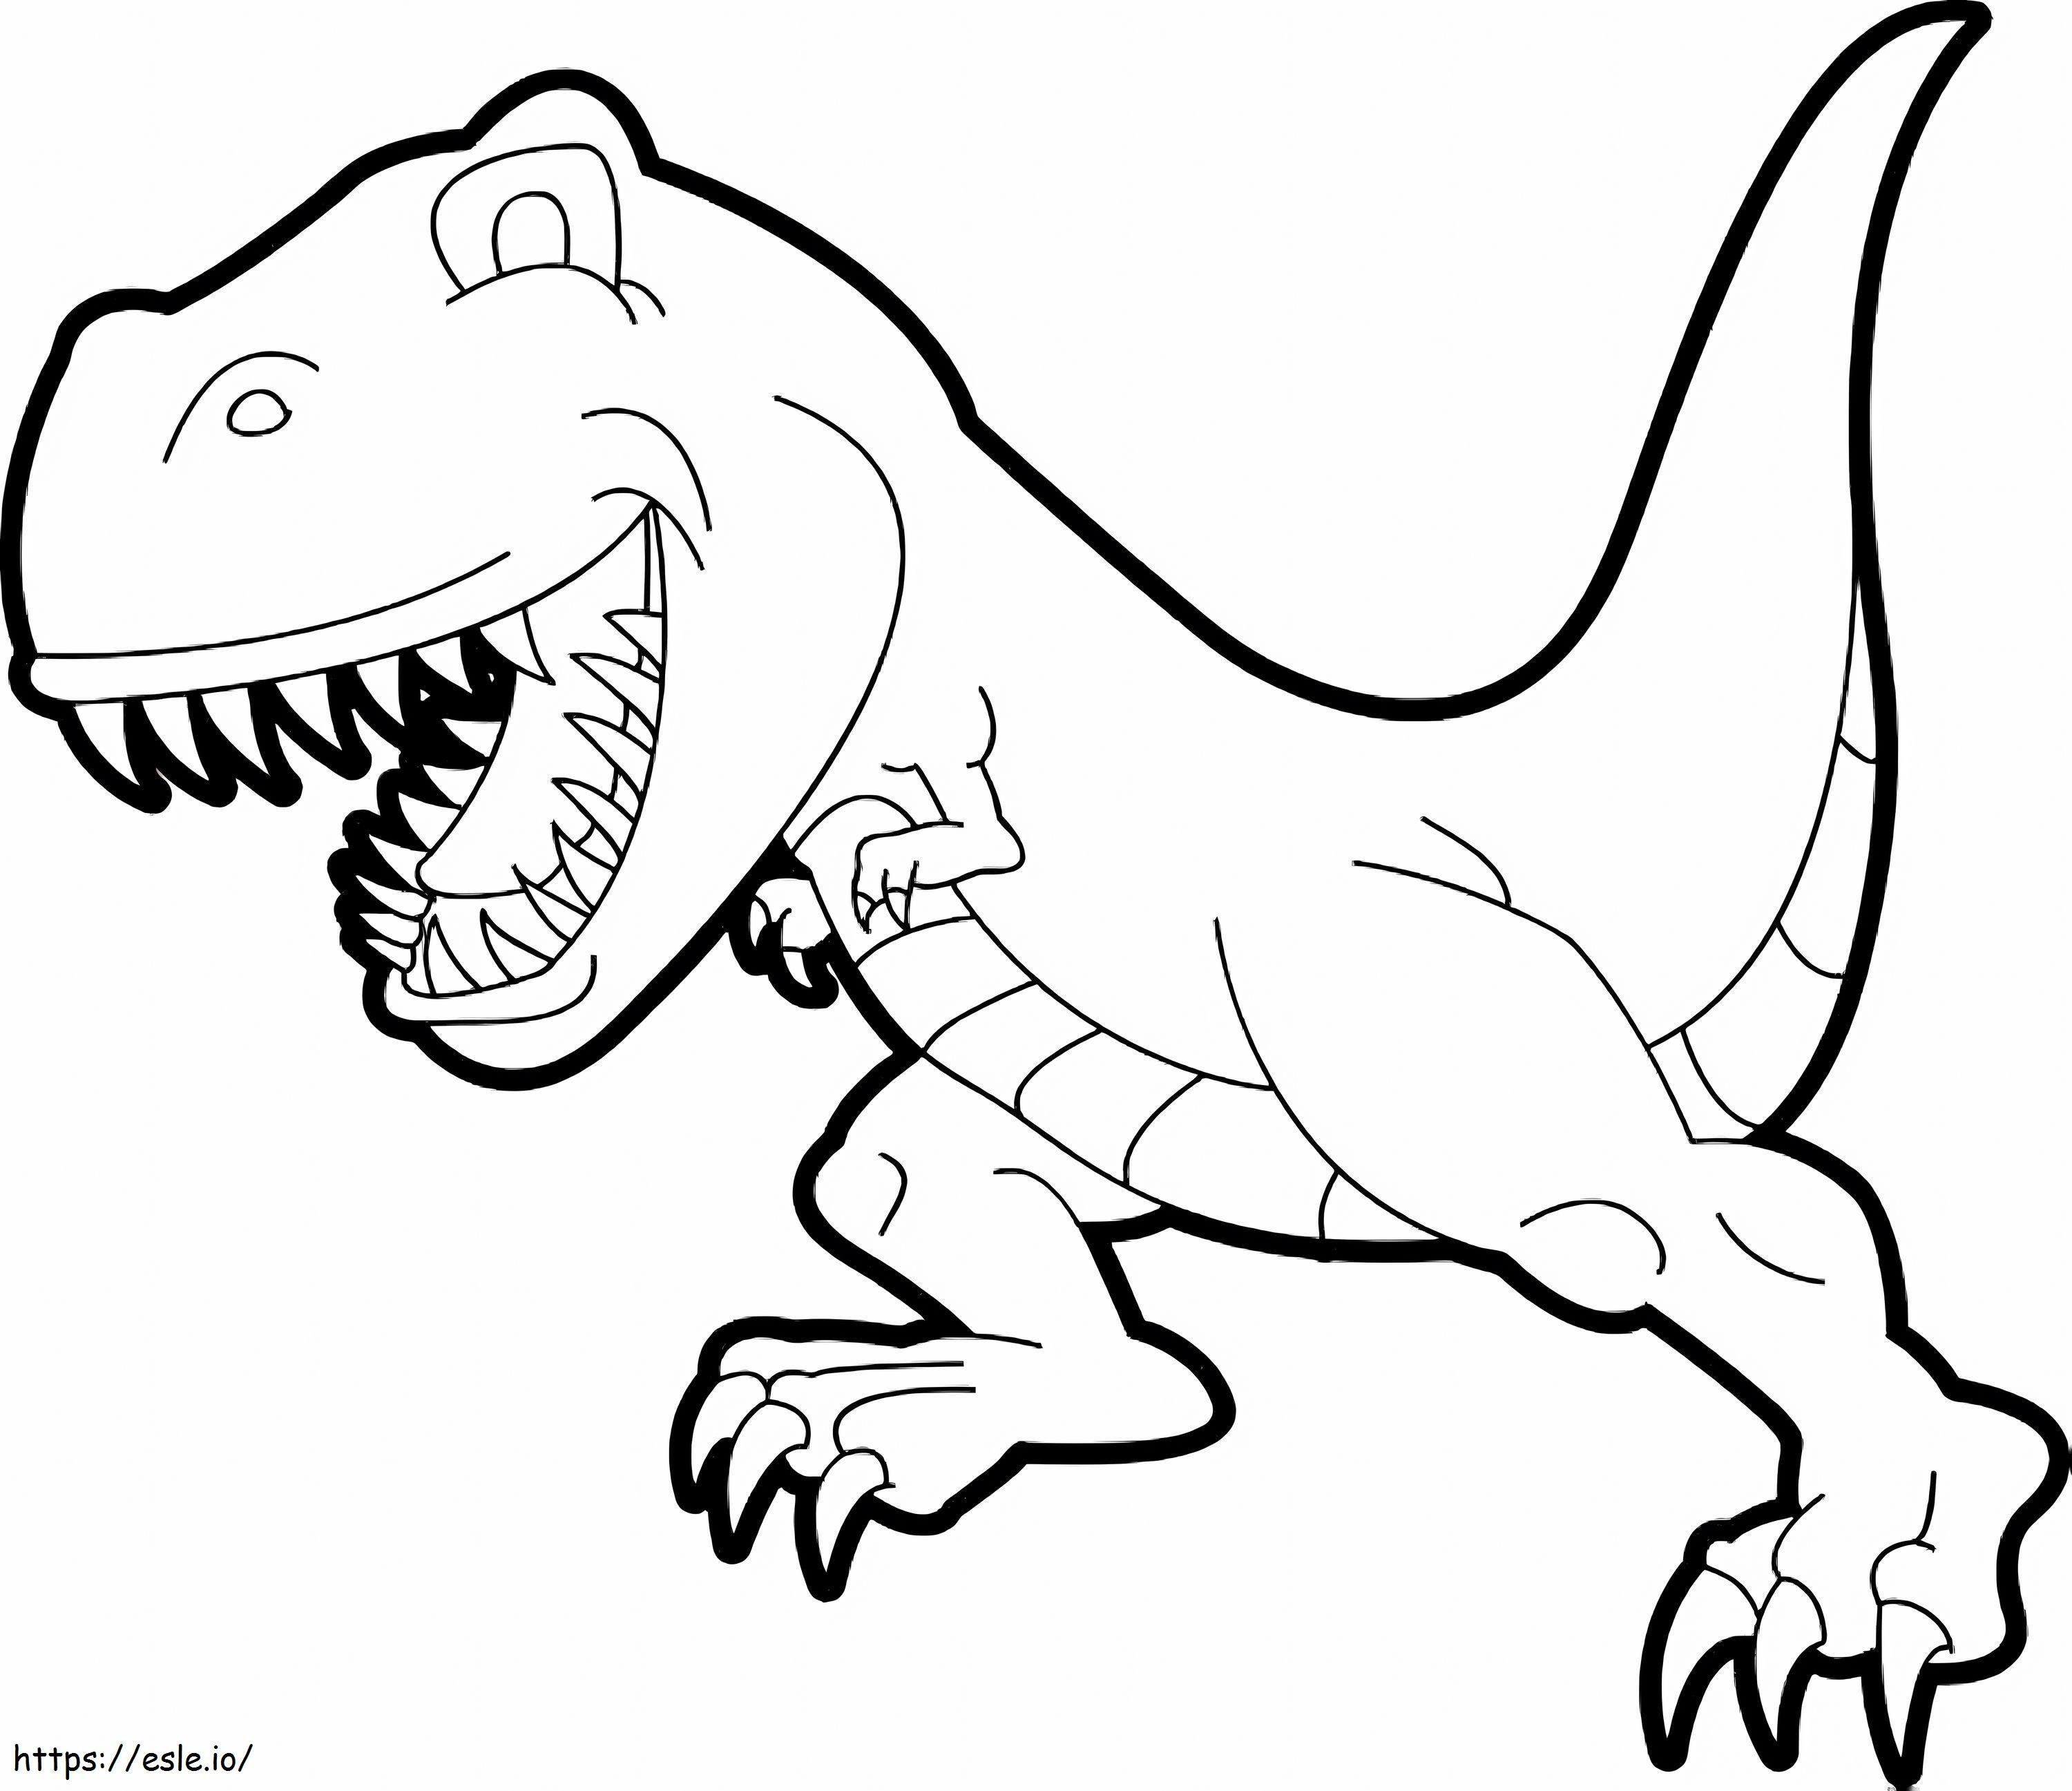 1539674613 T Rex Drawing Inspirationa Dinosaur New Simple Dinosaur Best Of T Rex Drawing coloring page